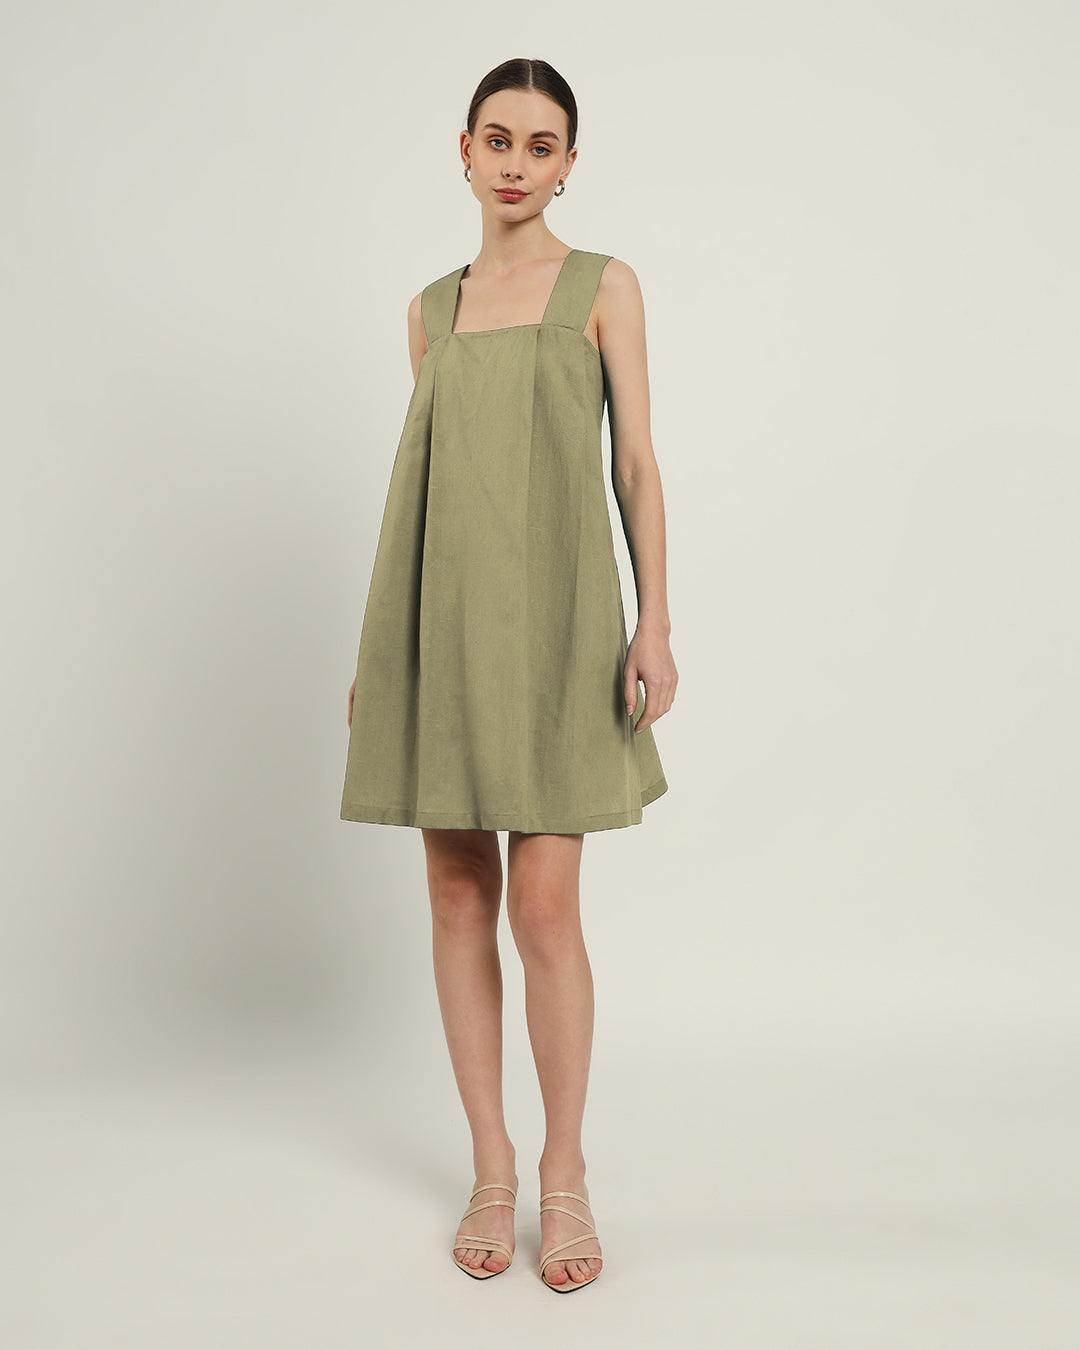 The Larissa Daisy Olive Linen Dress